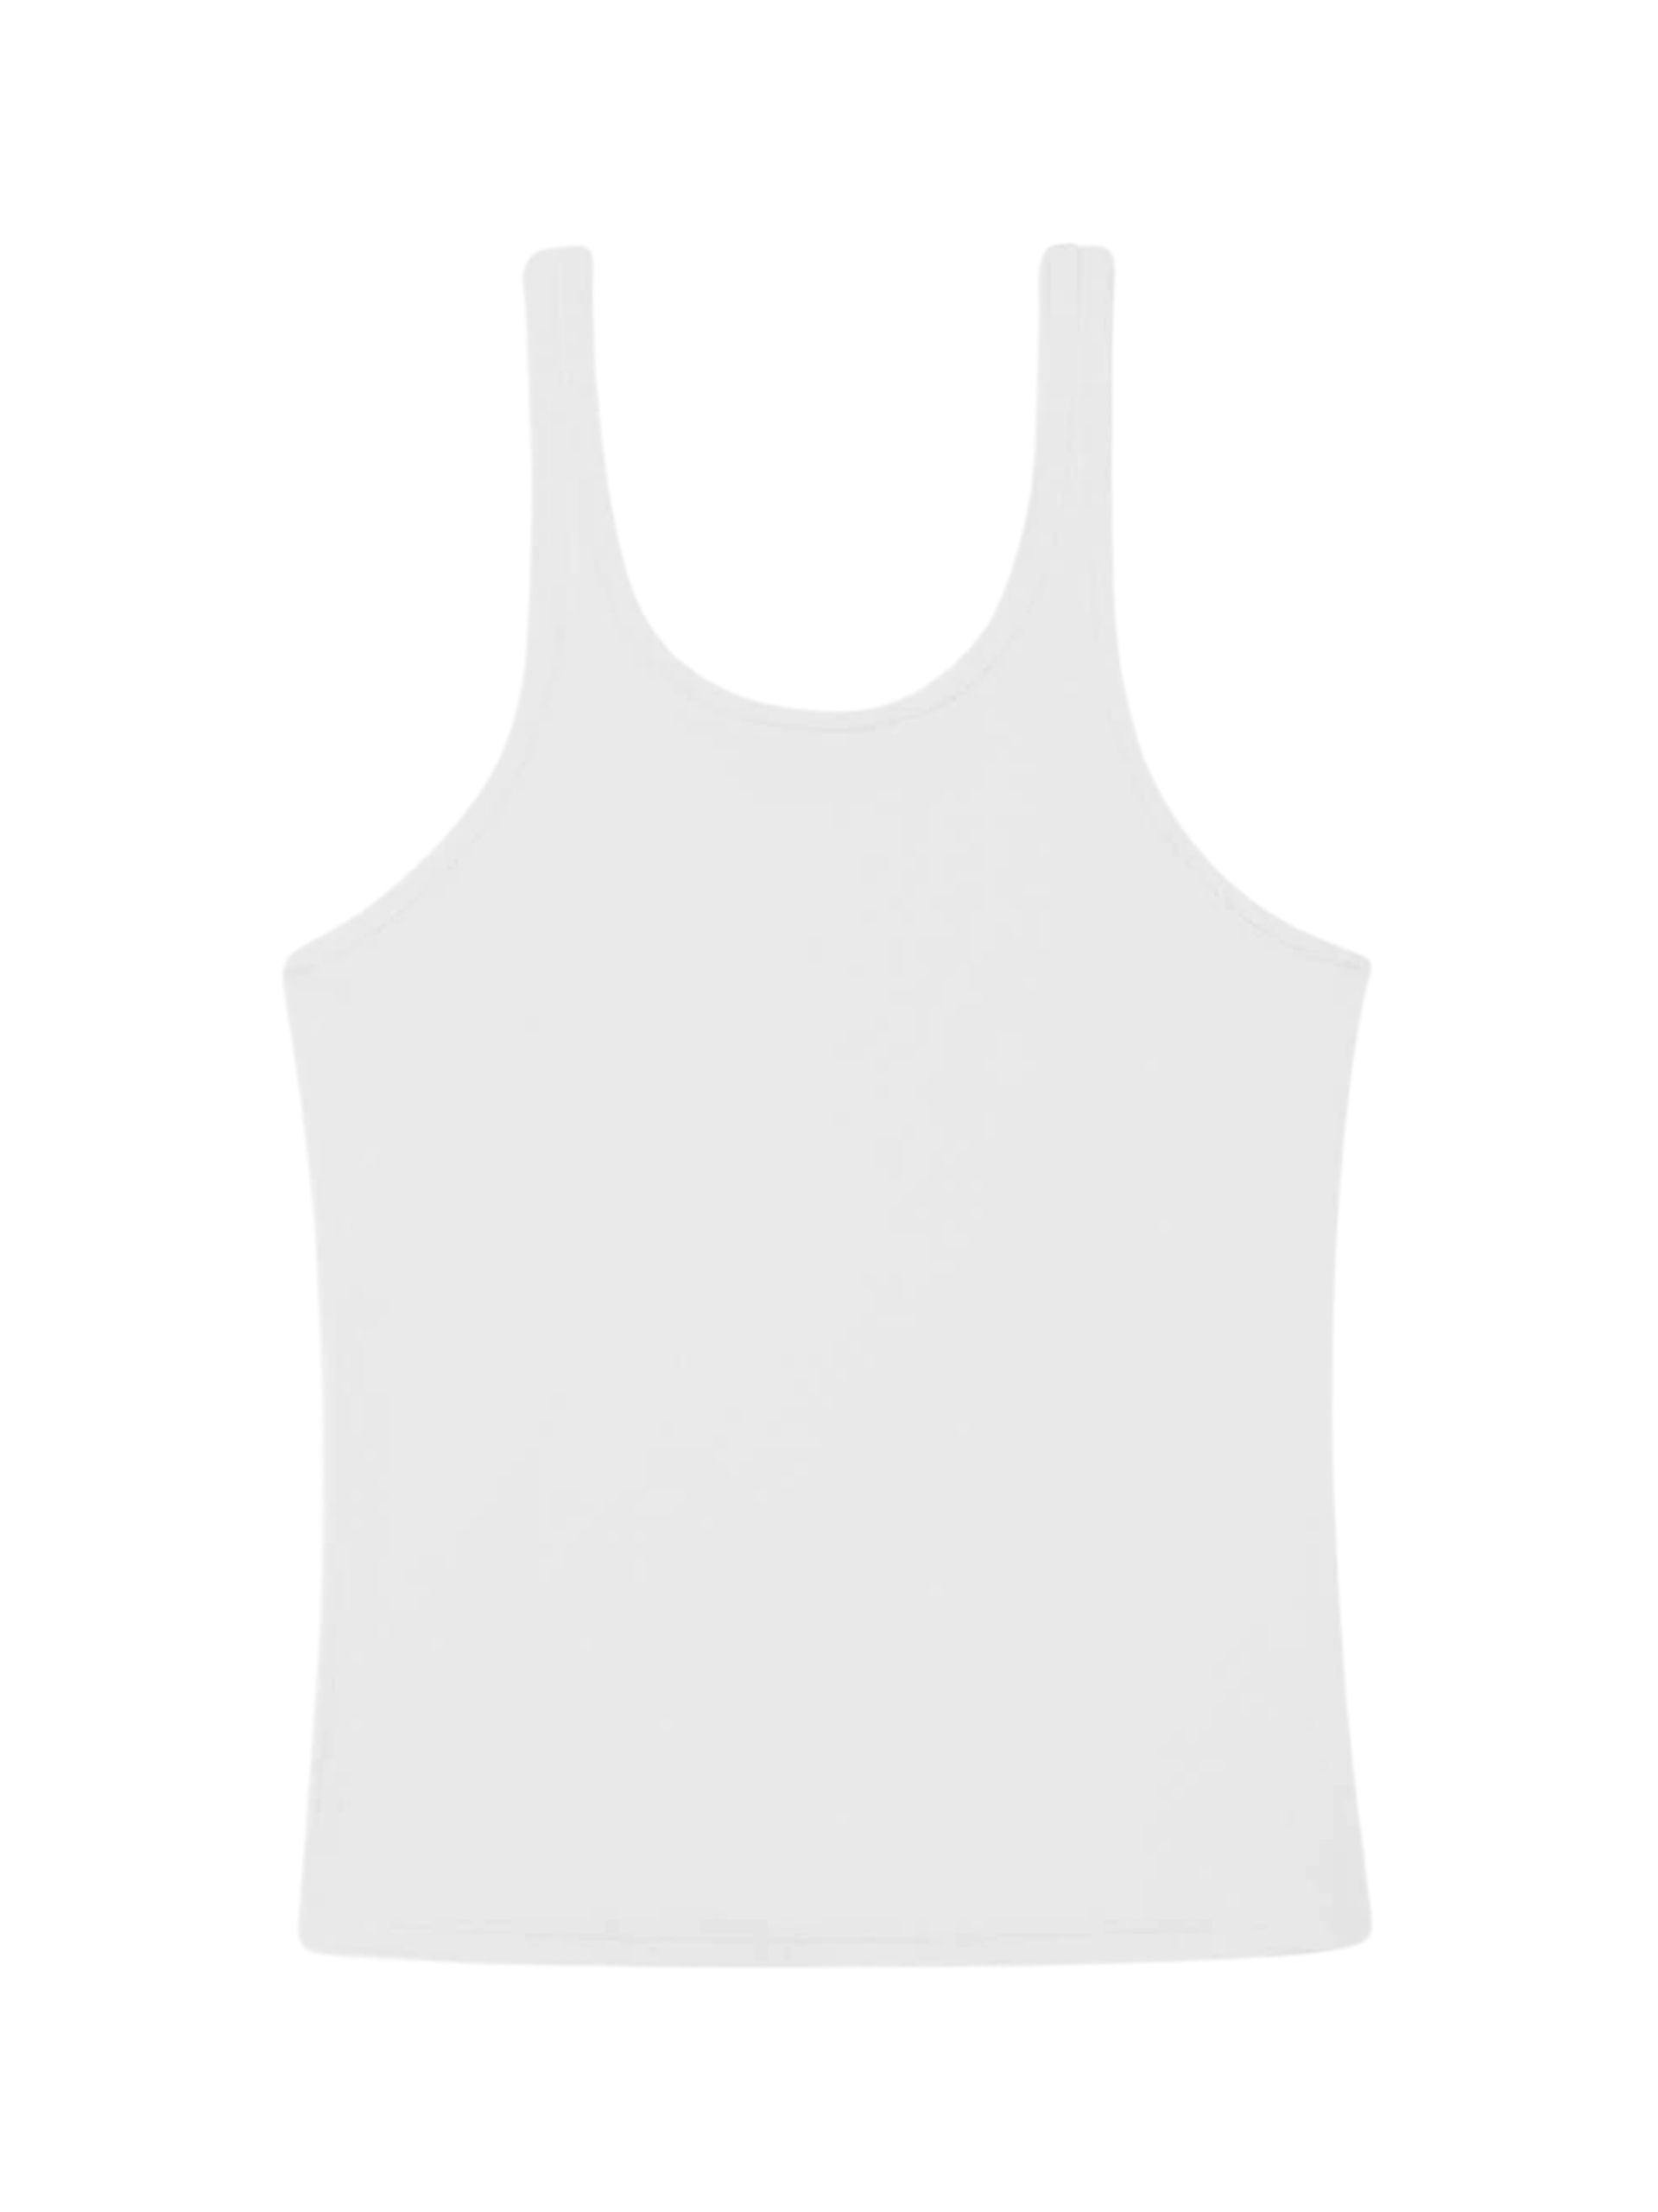 ANINE BING April Tank / White - Seletti Concept Store